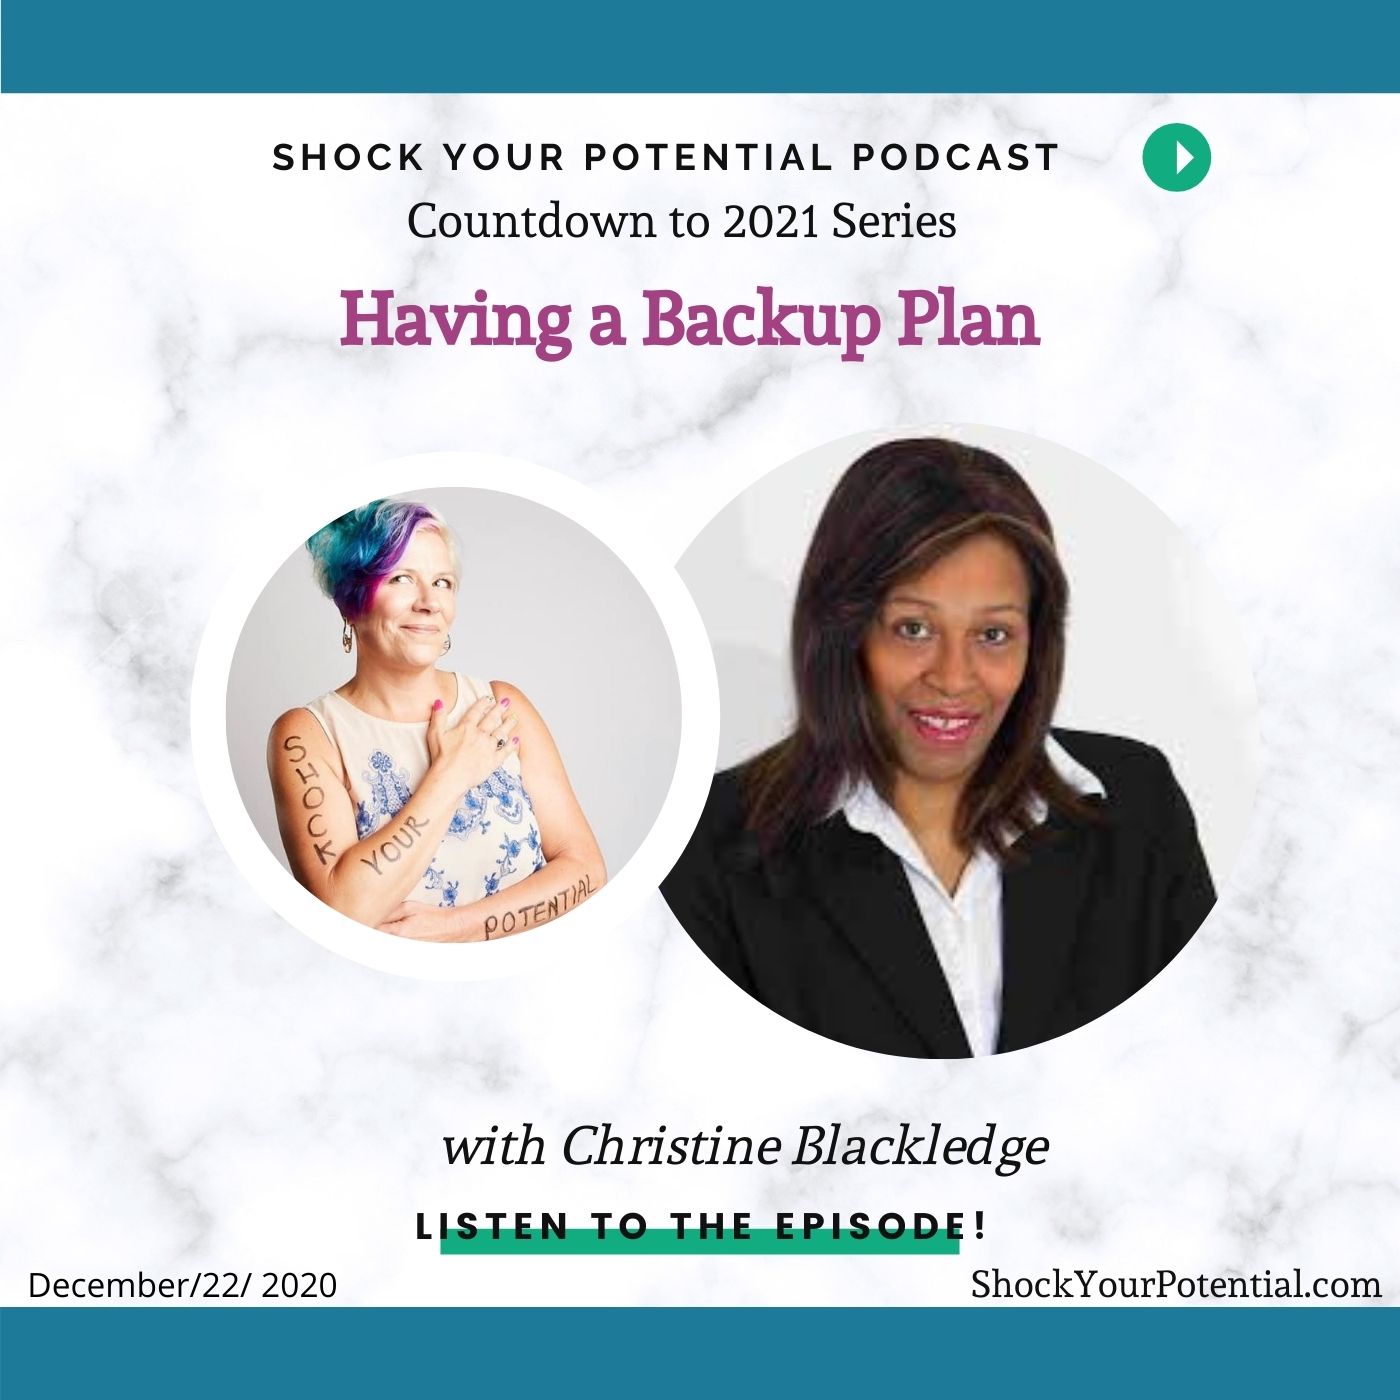 Having a Backup Plan – Christine Blackledge